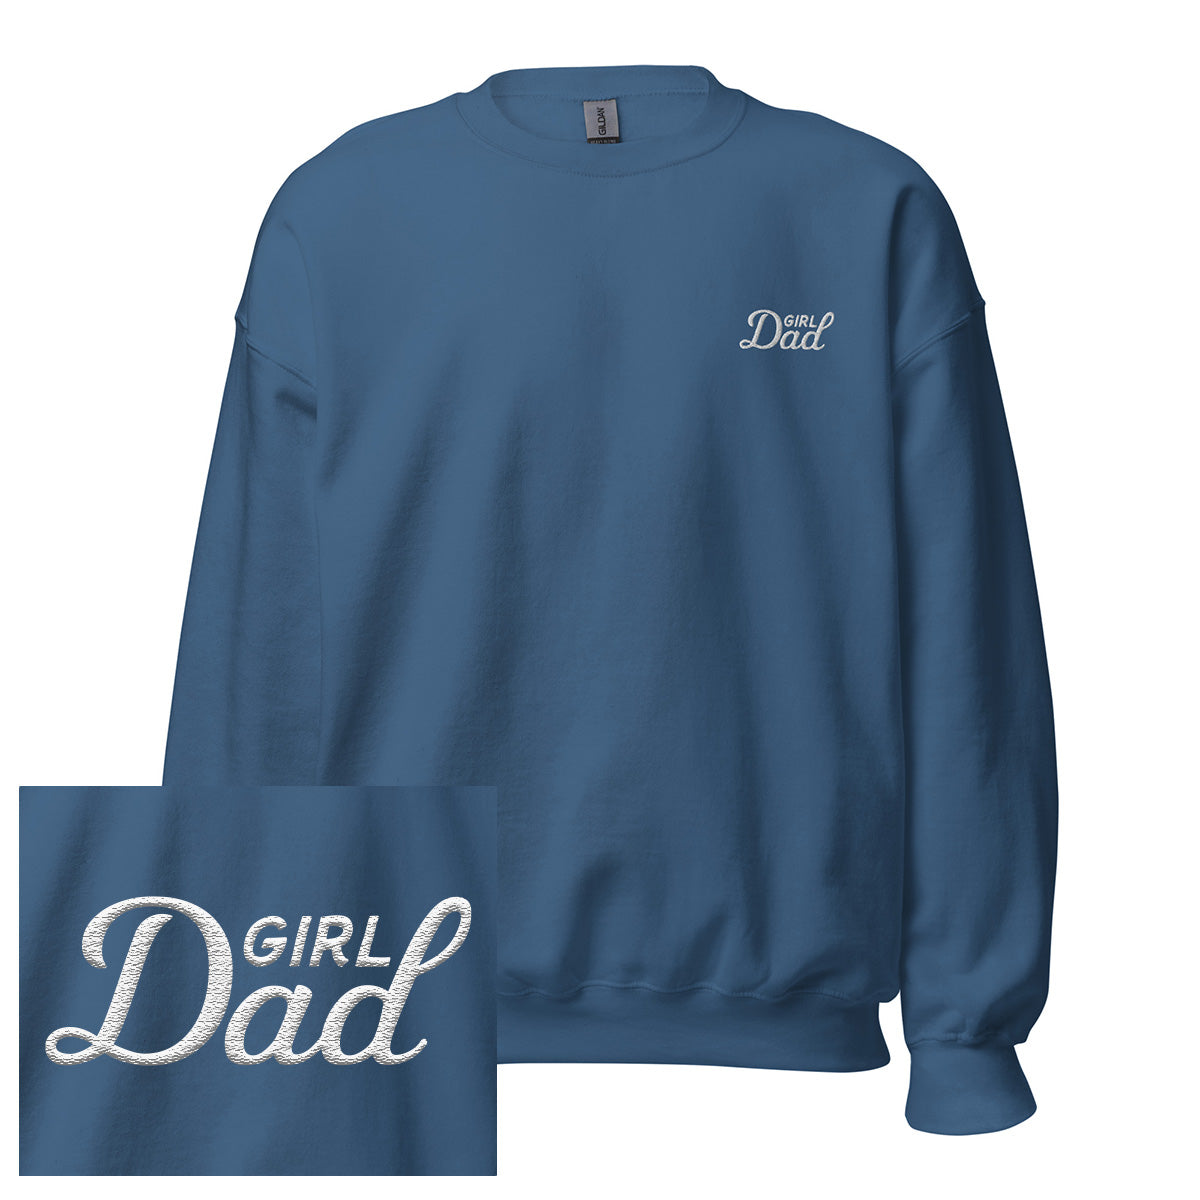 Girl Dad Embroidered Crewneck-Crewnecks-Bussin With The Boys-Indigo Blue-S-Barstool Sports